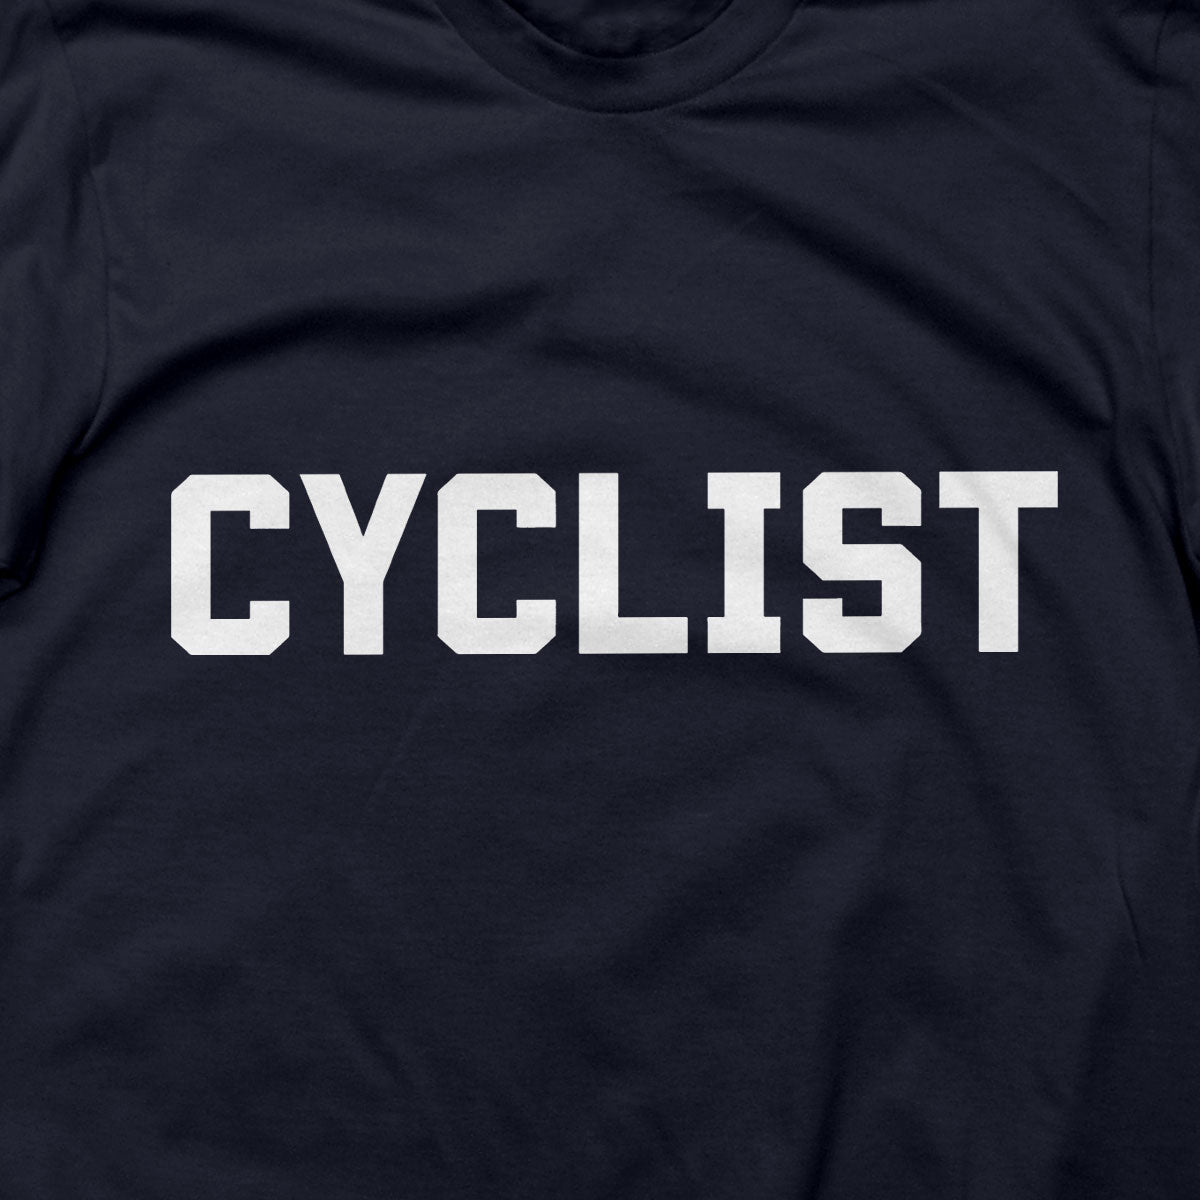 Cyclist T (NAVY)